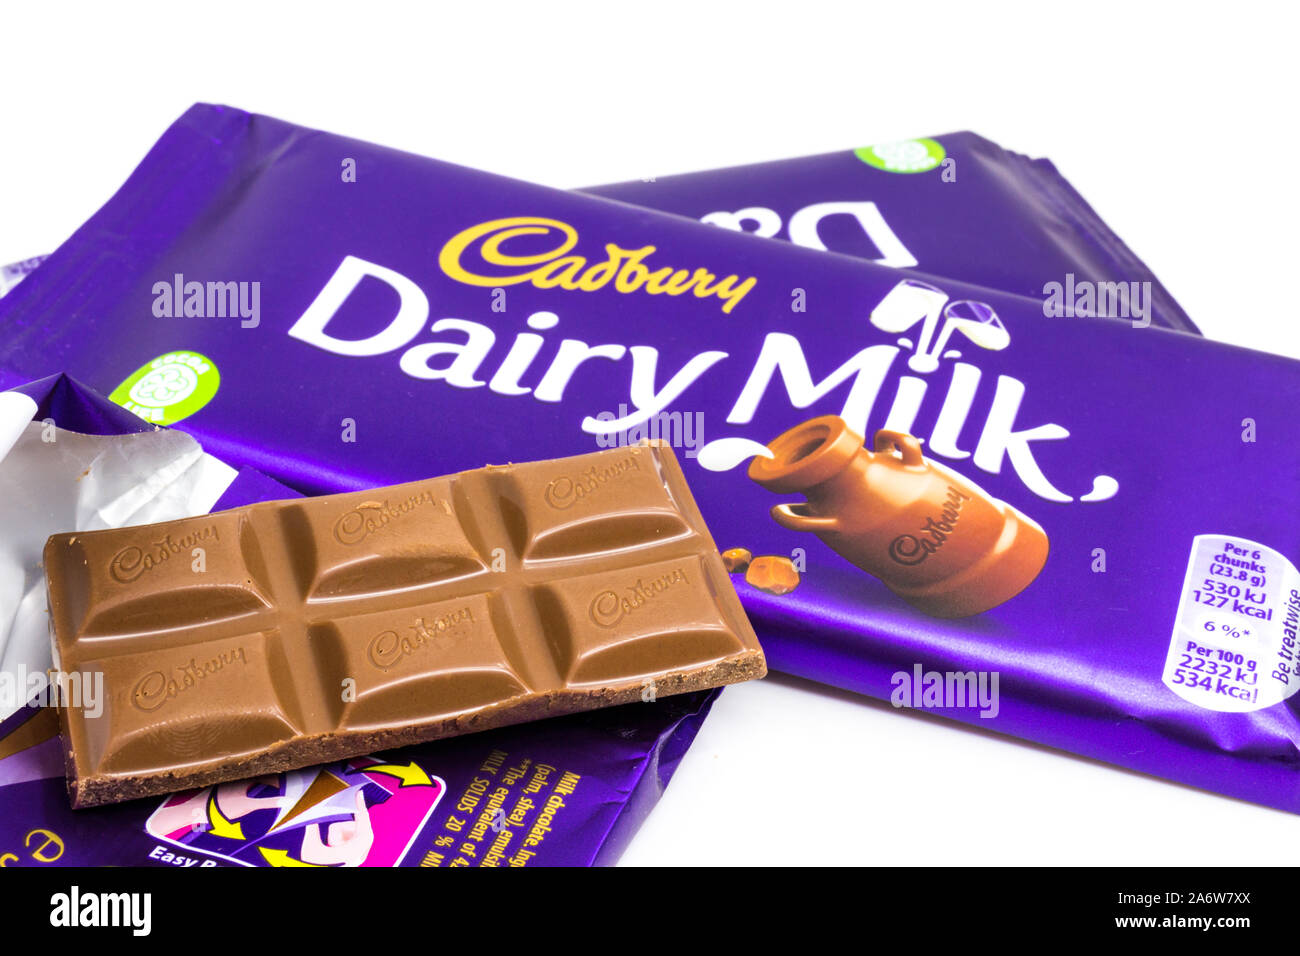 Cadbury dairy milk chocolate bars emballés et déballés Banque D'Images